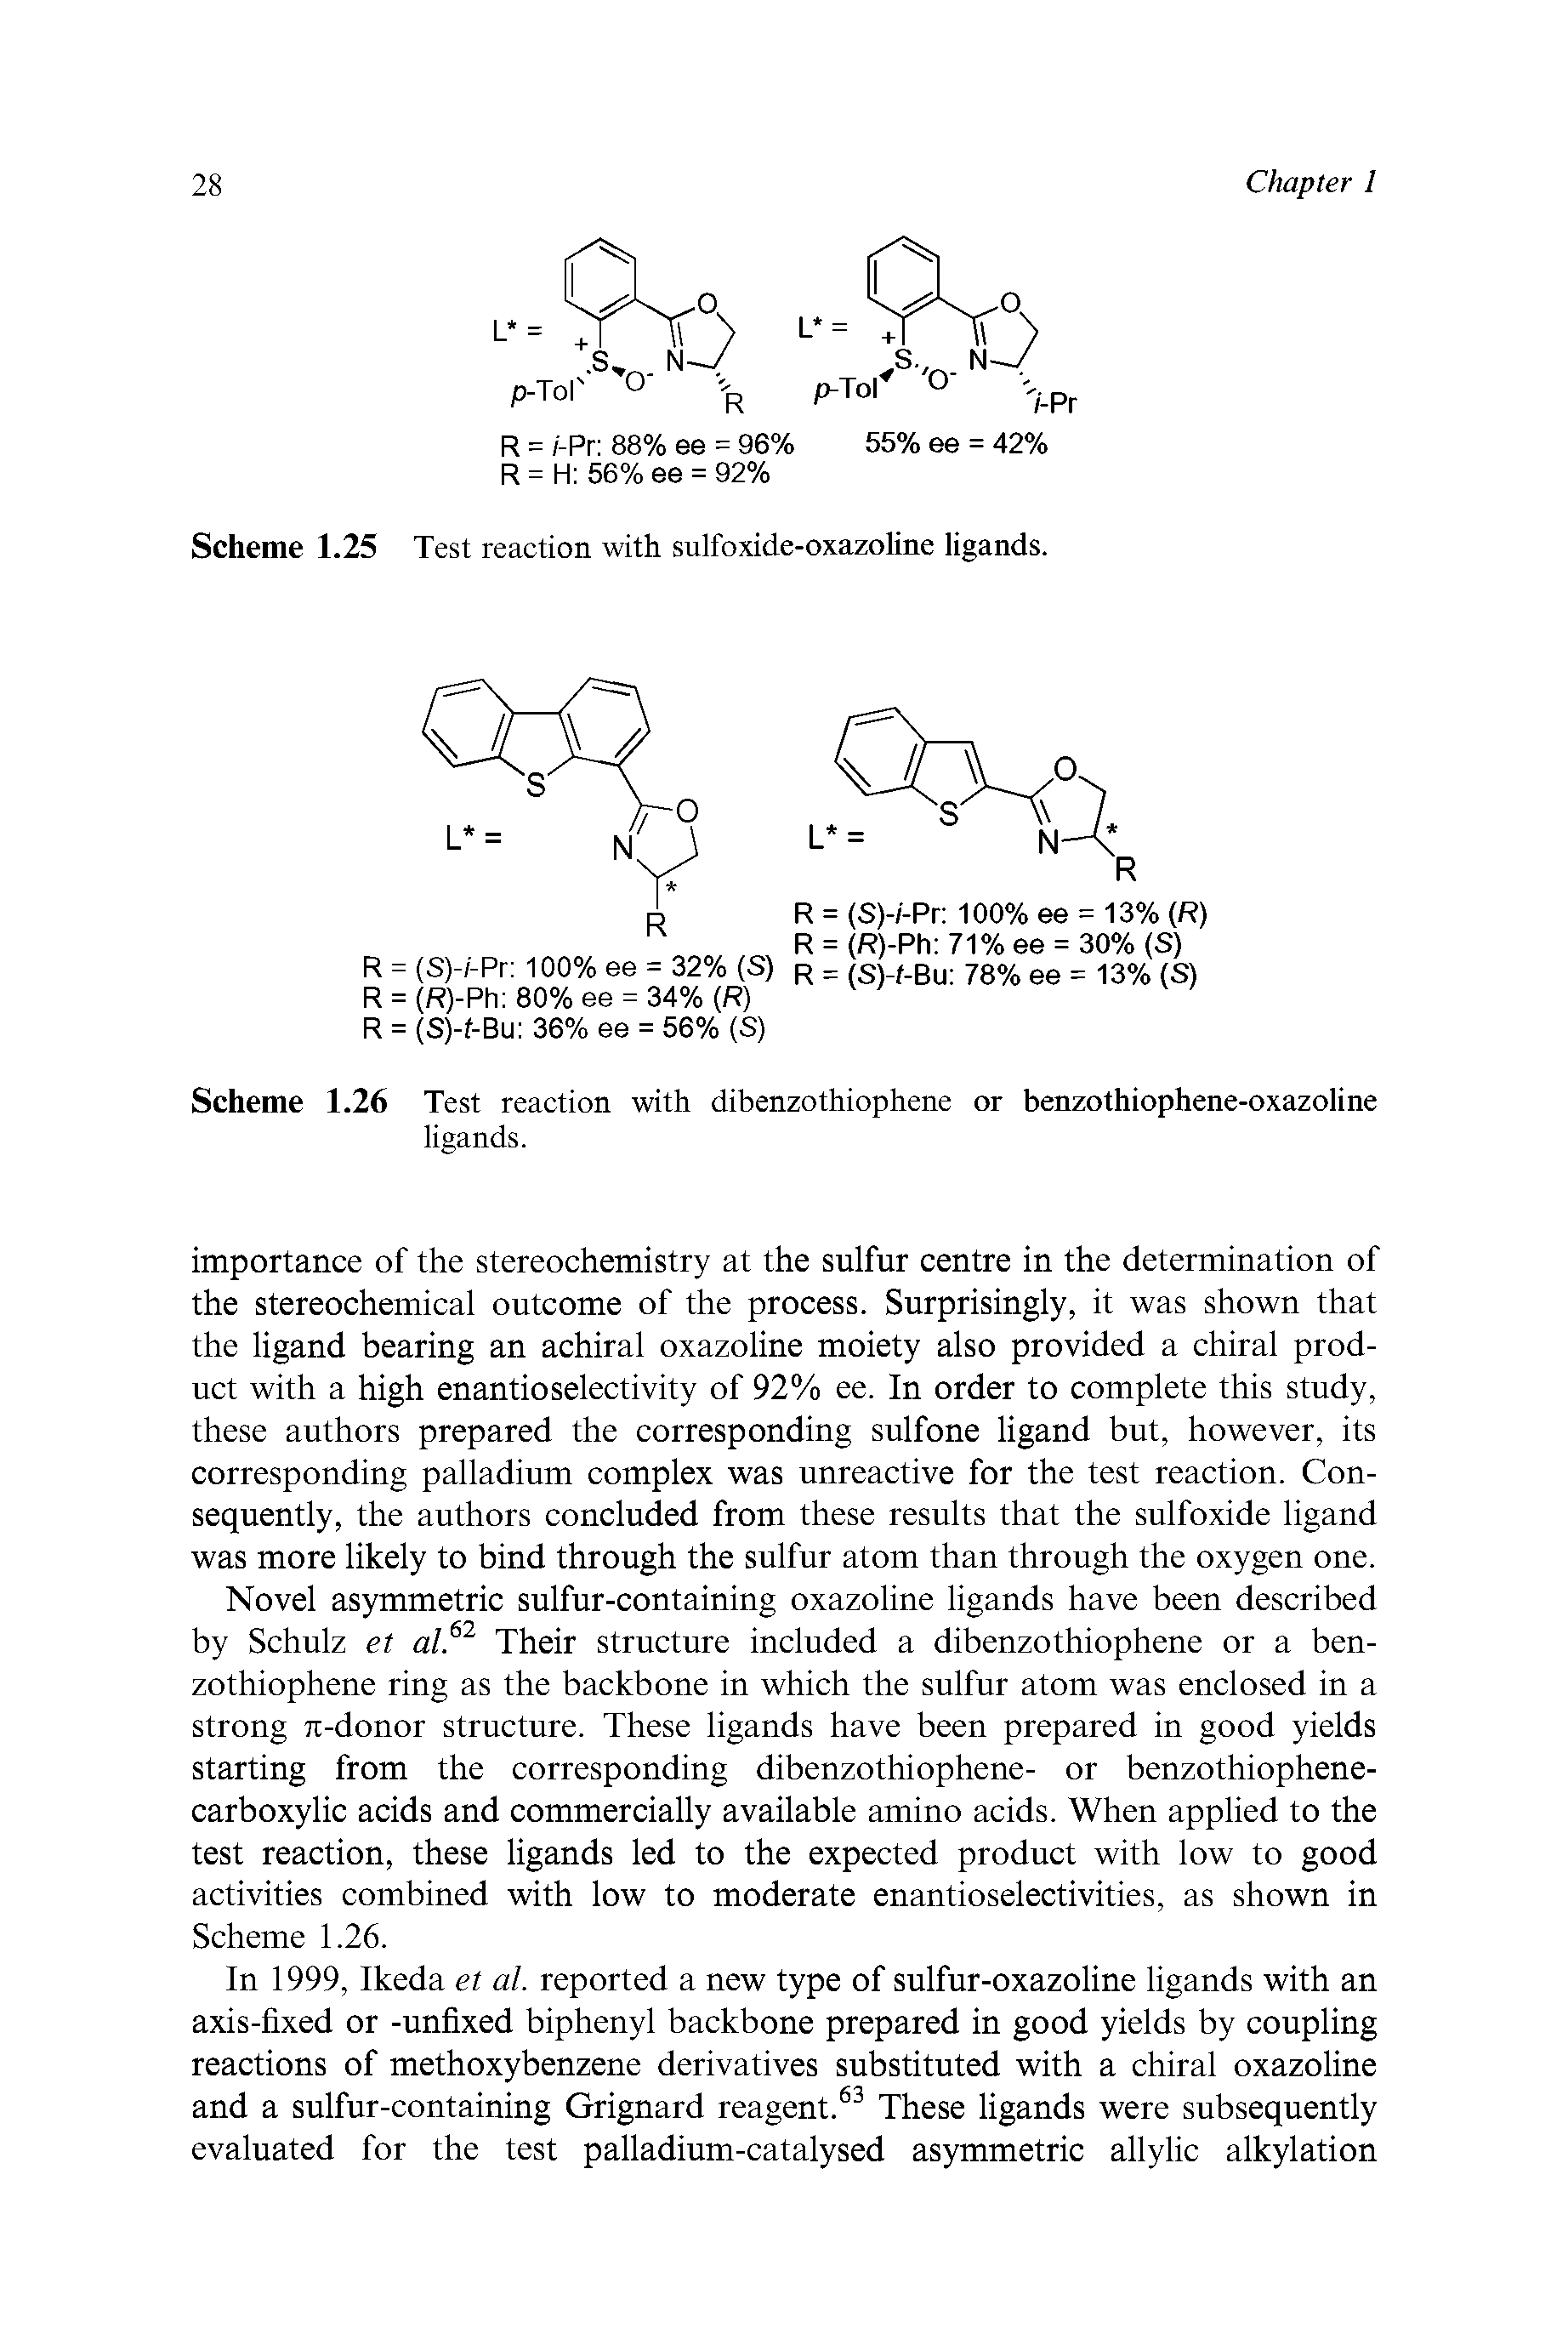 Scheme 1.26 Test reaction with dibenzothiophene or benzothiophene-oxazoline ligands.